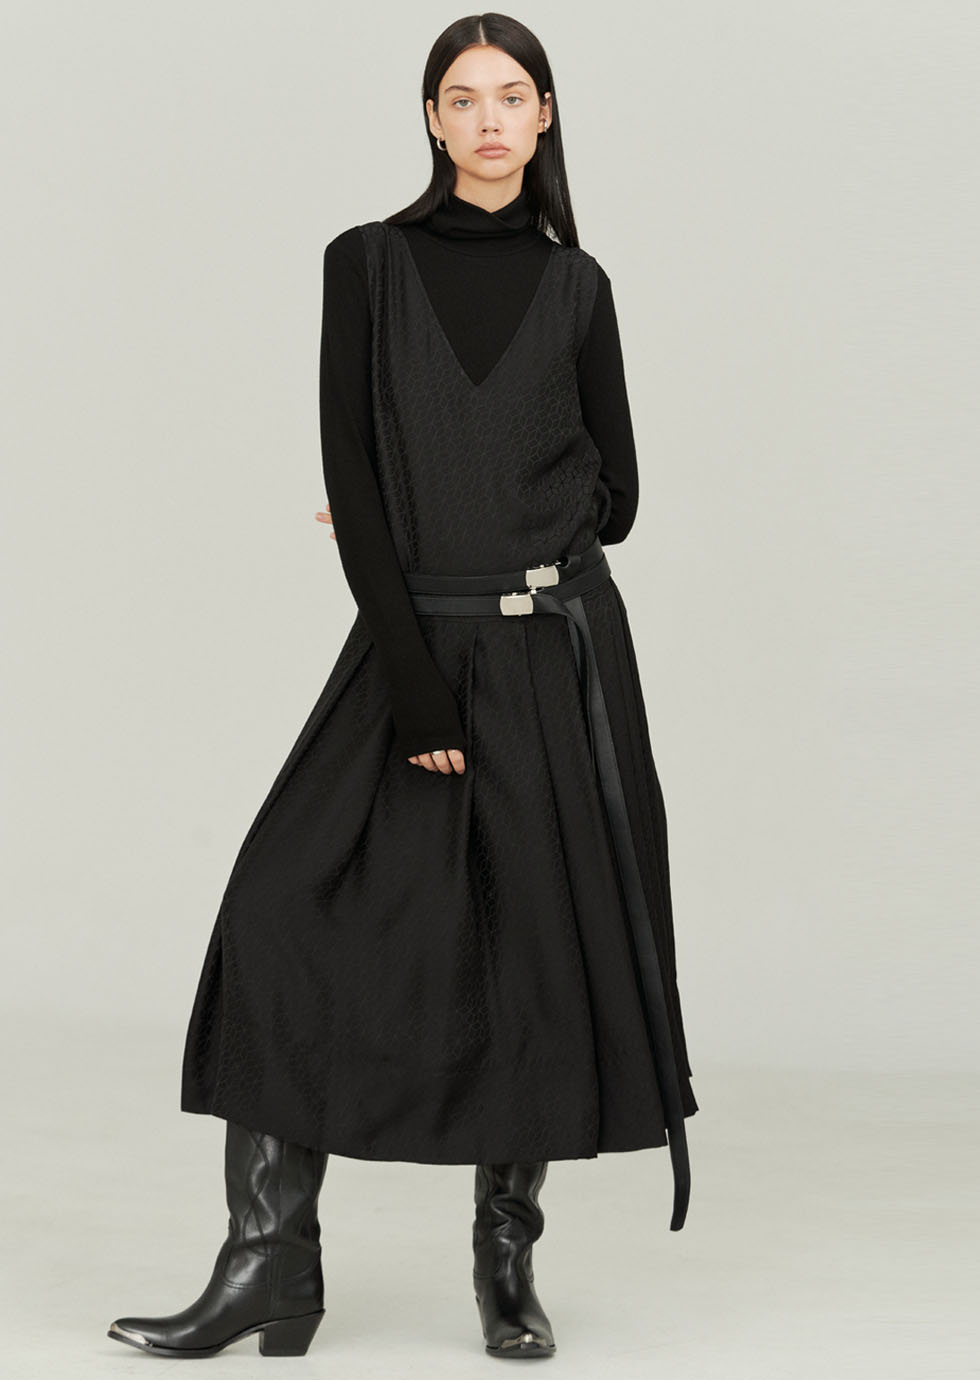 [AIMONS BESPOKE] SOFIA BLACK JACQUARD SLEEVEESS DRESS - 에몽 공식스토어  aimons